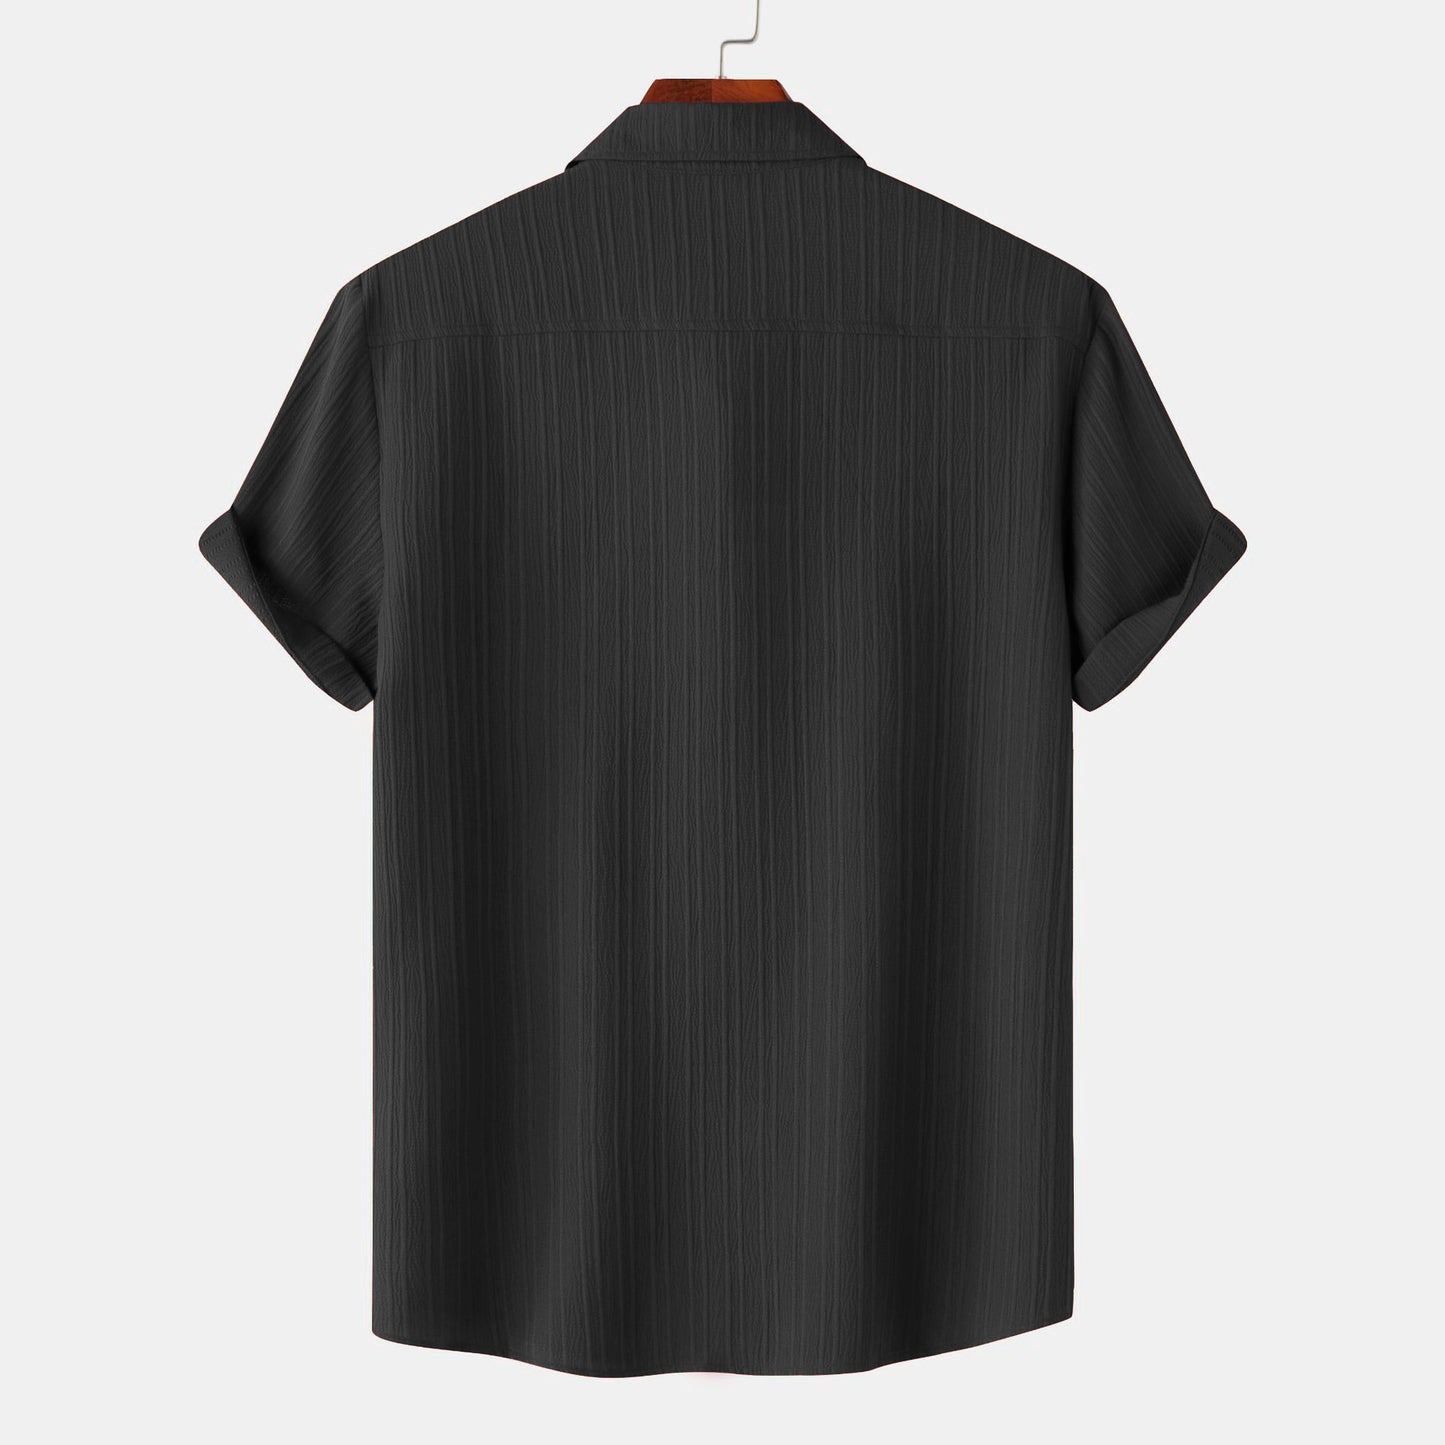 Man's Premium Black Shirt Collections